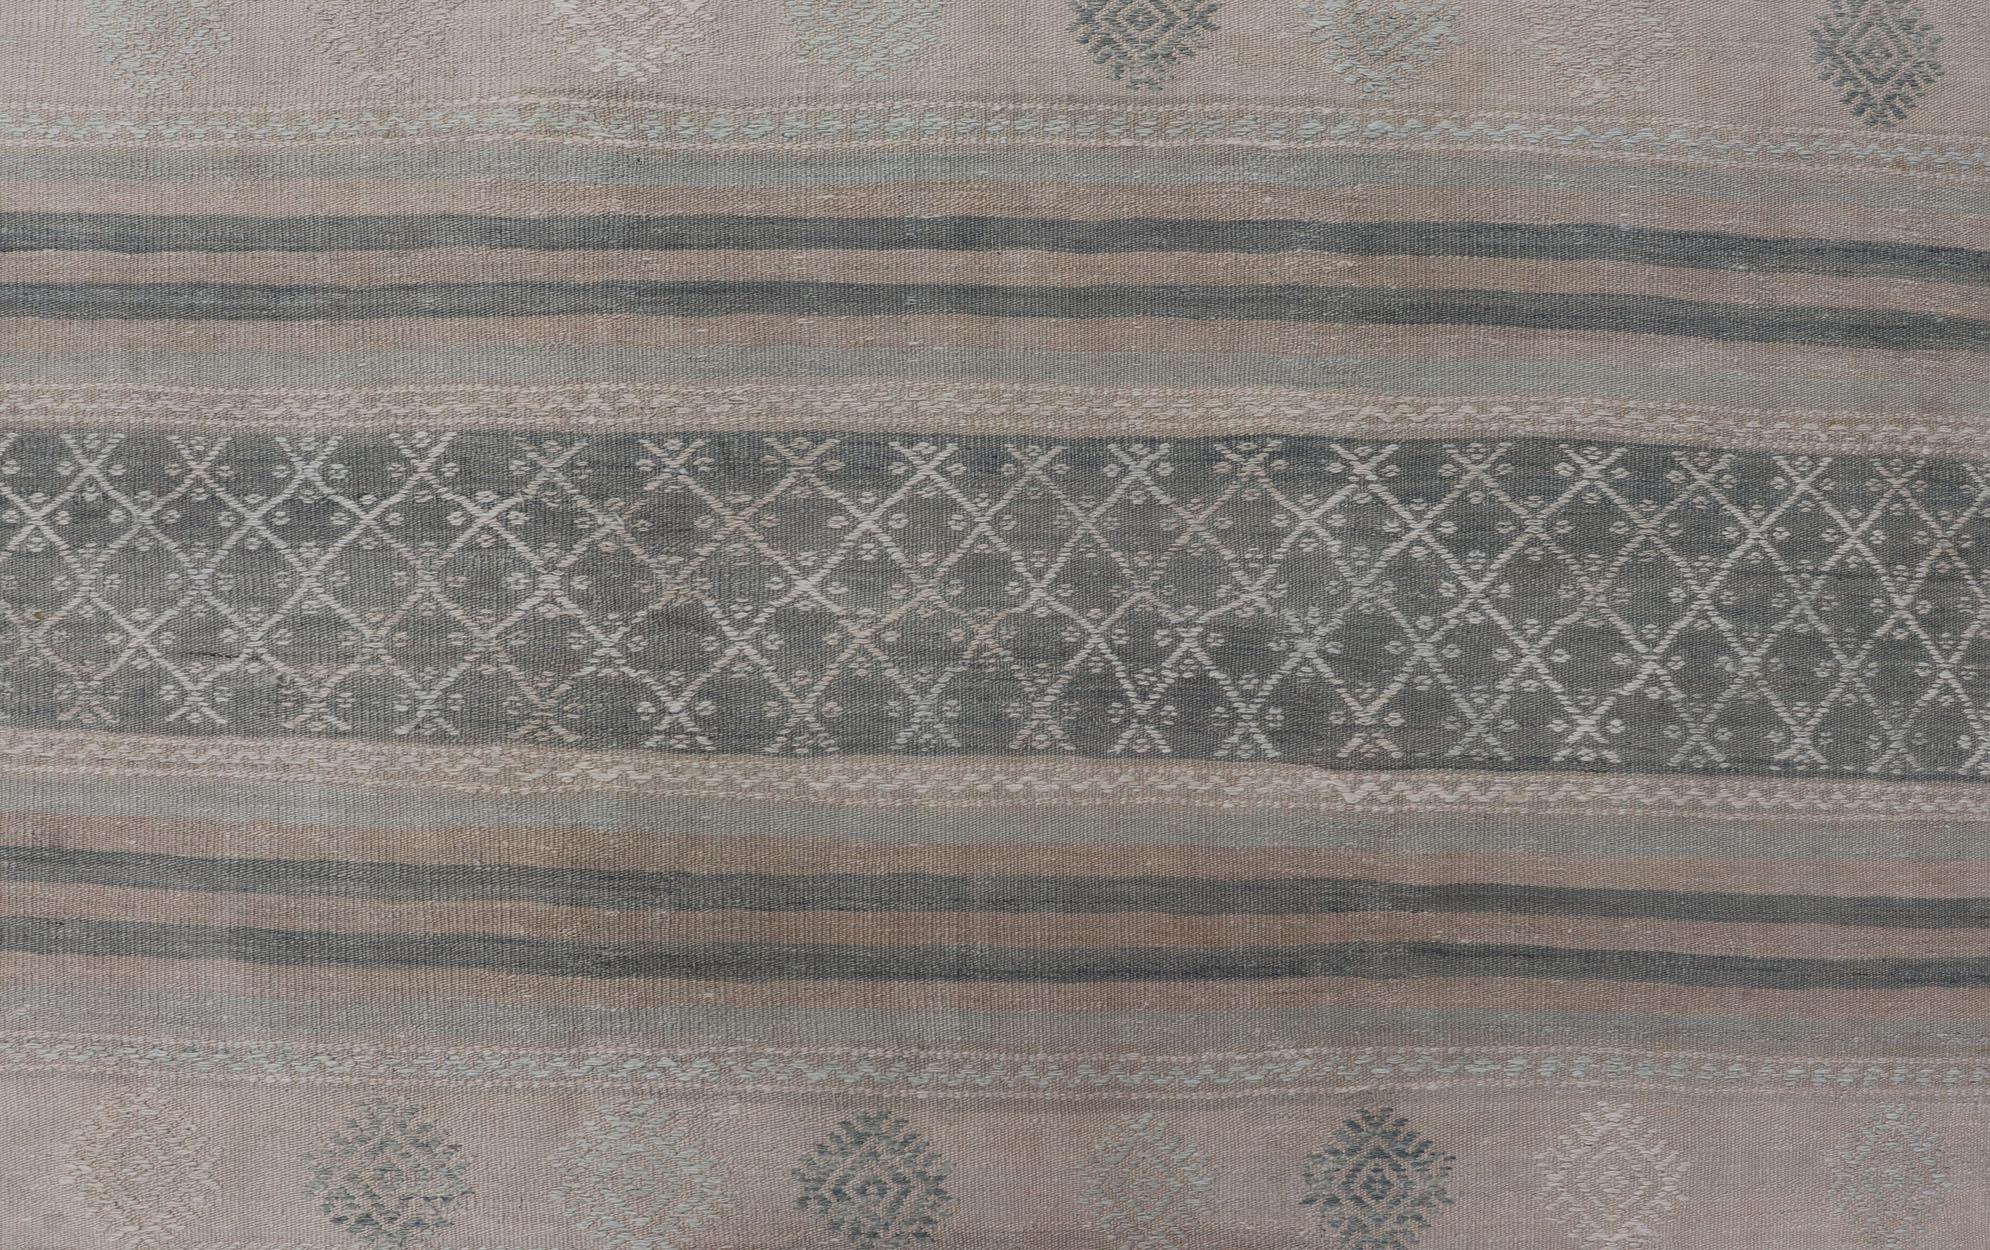 Muted Vintage Turkish Kilim Rug with Horizontal Stripes & Tribal Motifs For Sale 2